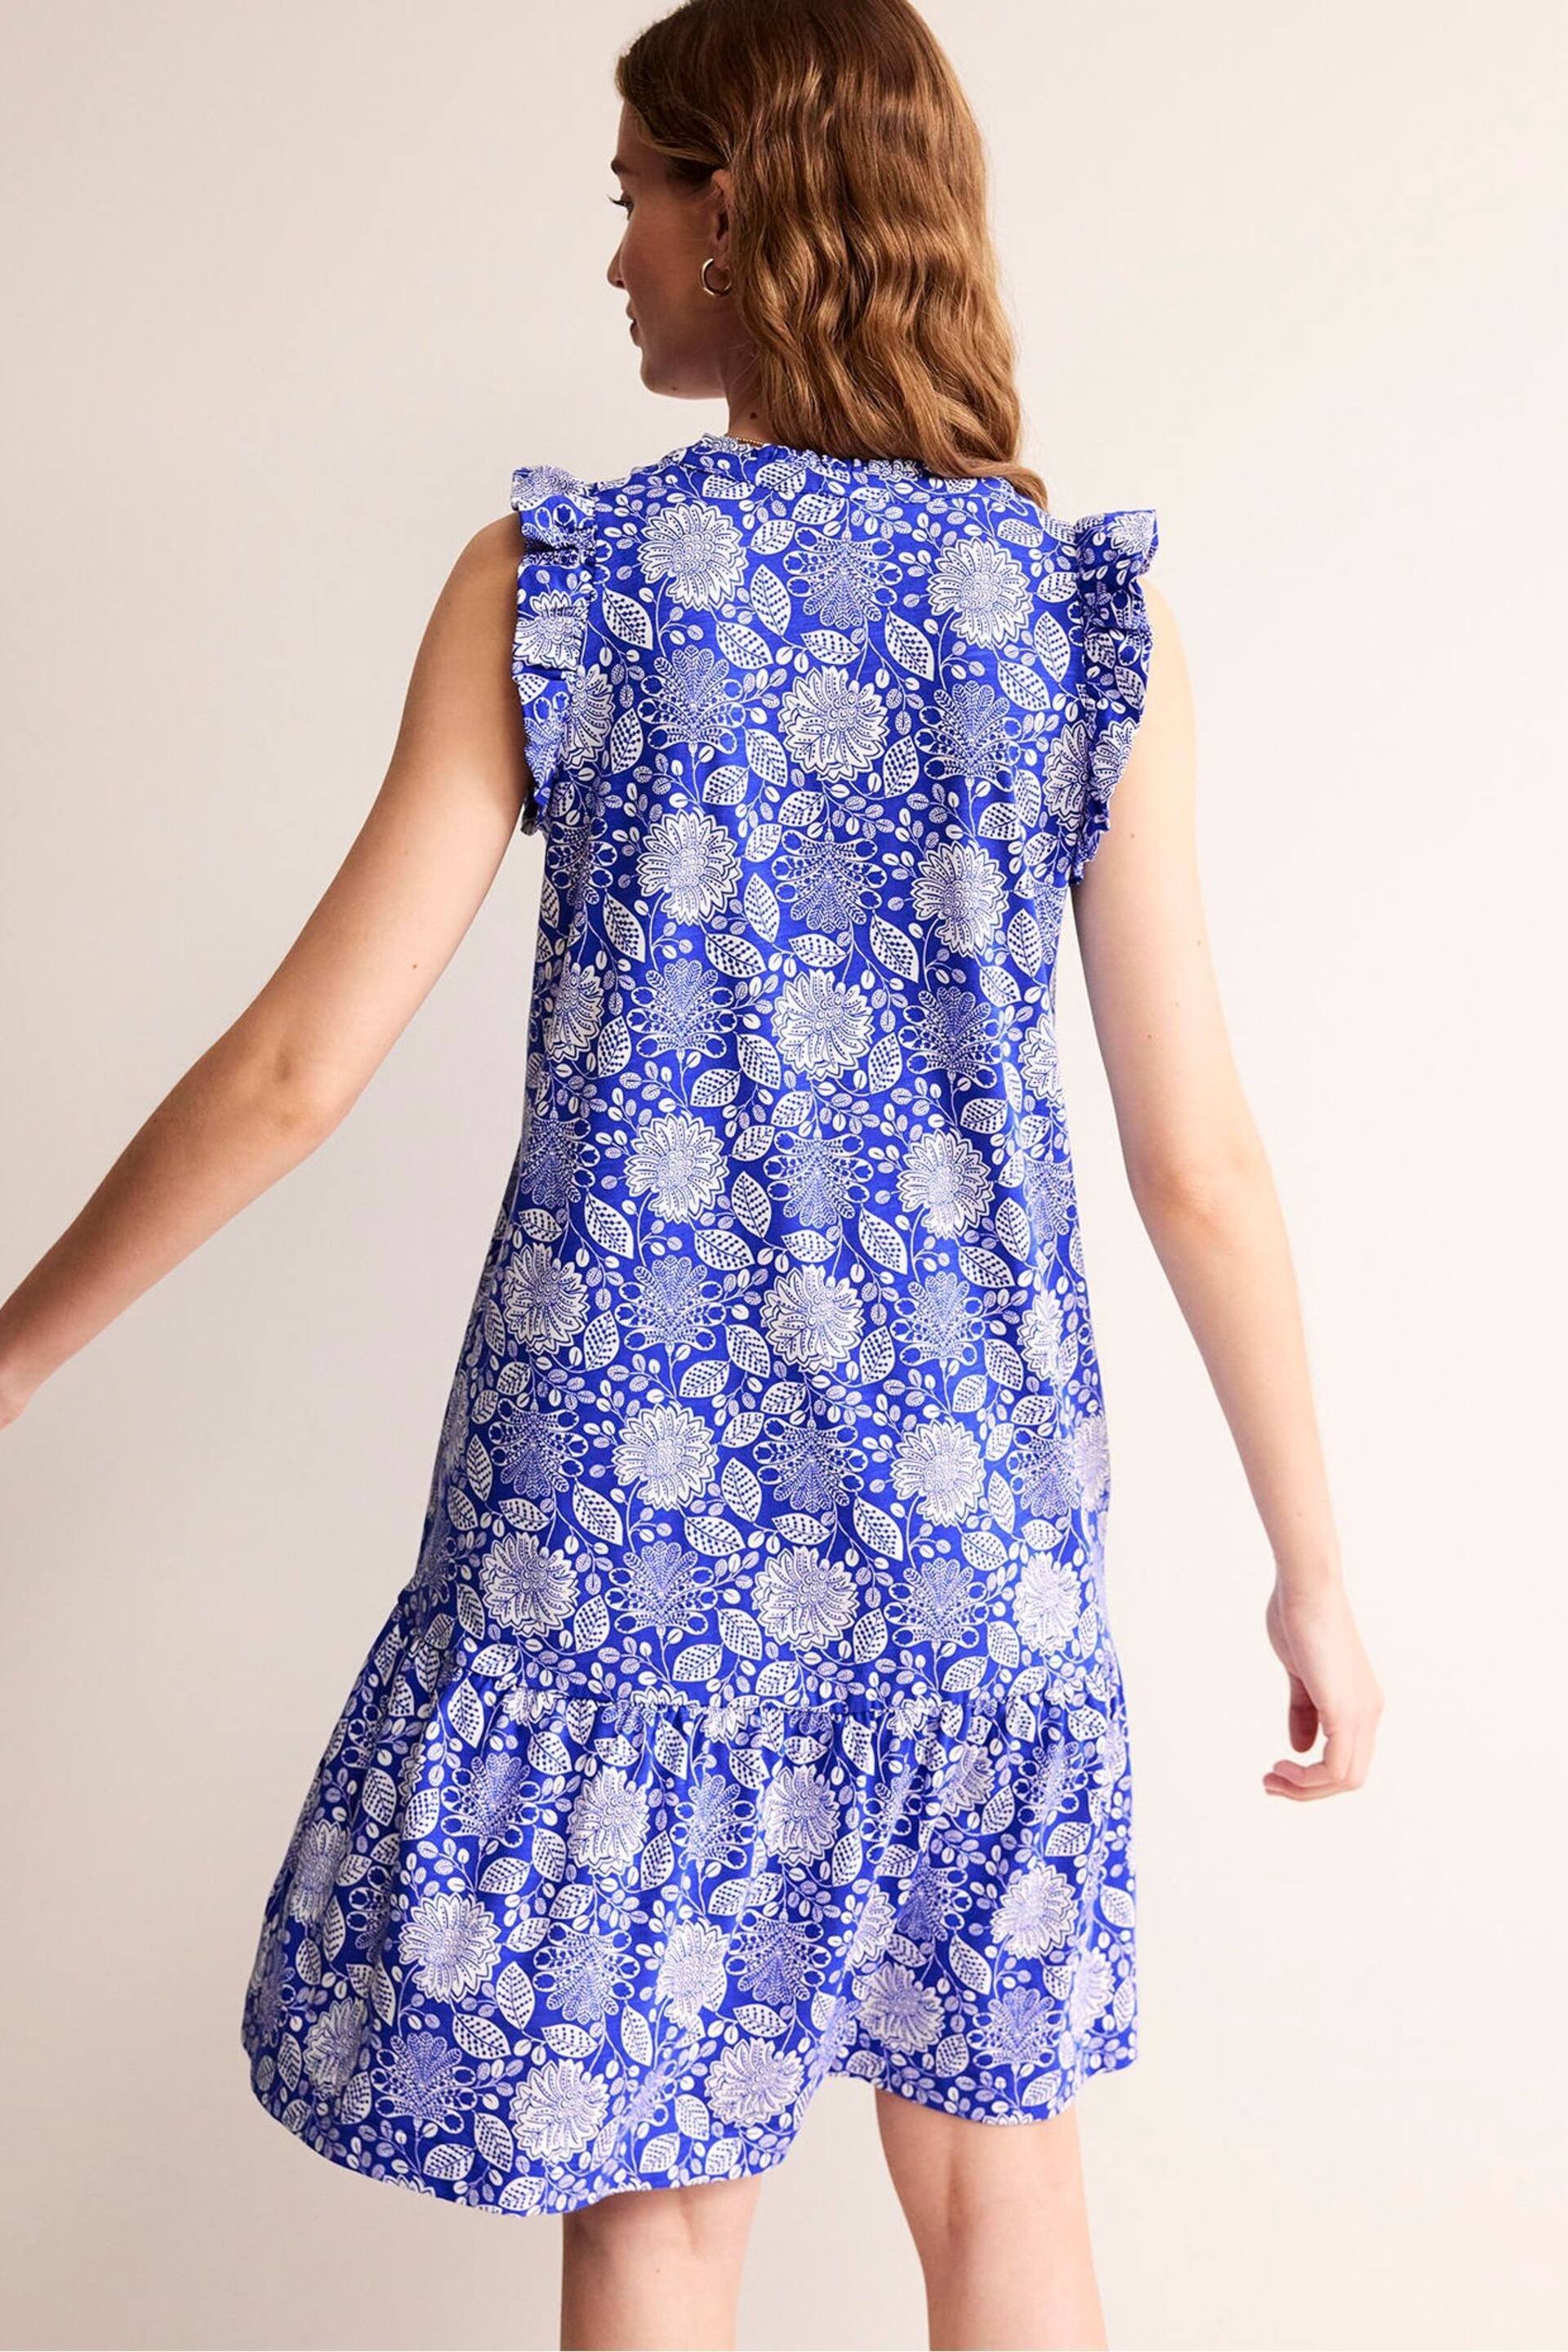 Boden Blue Daisy Jersey Short Tier Dress - Image 3 of 6